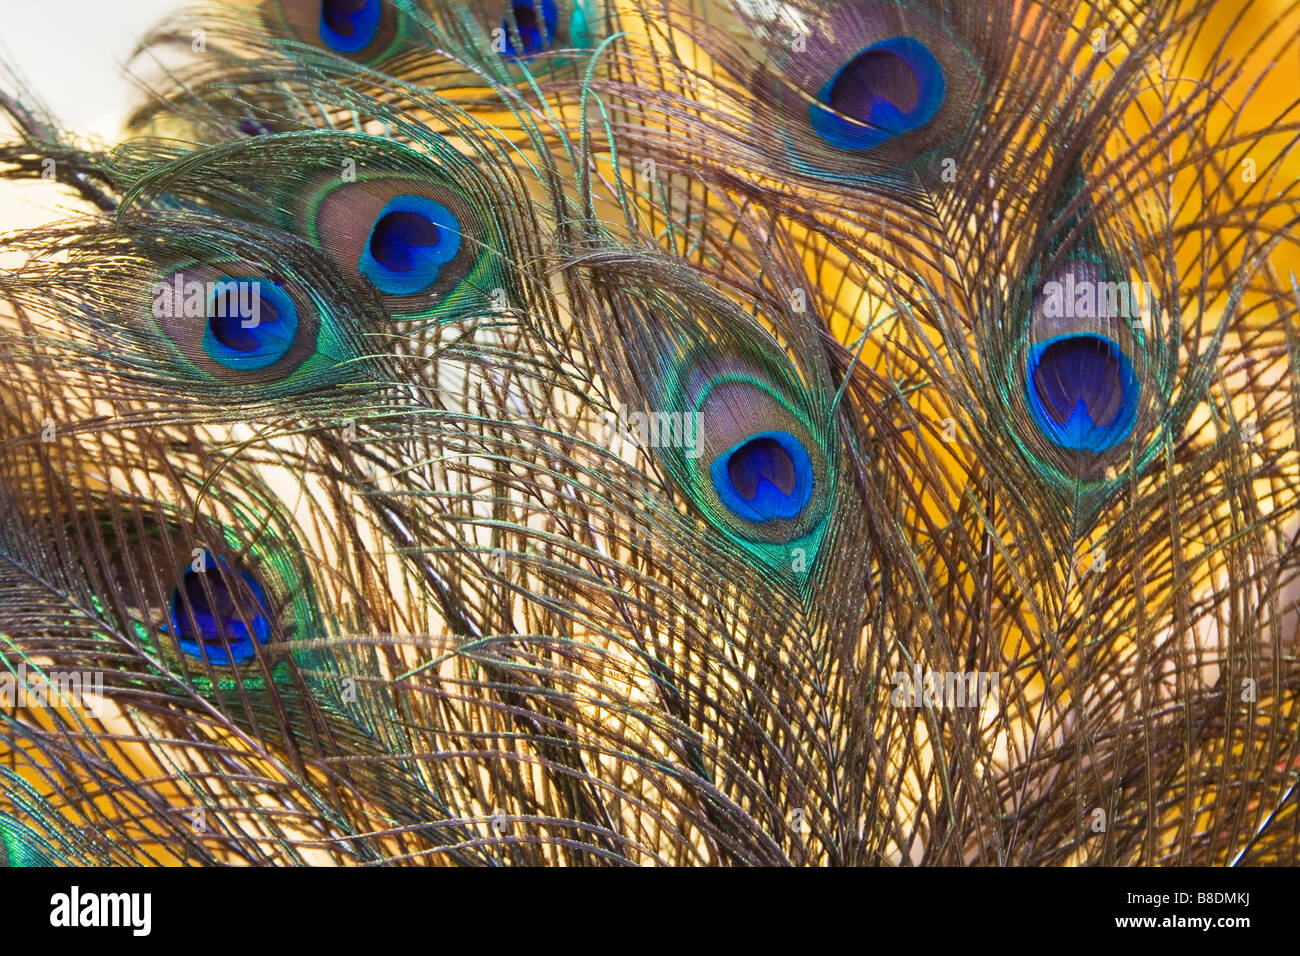 Peacock feathers Stock Photo - Alamy